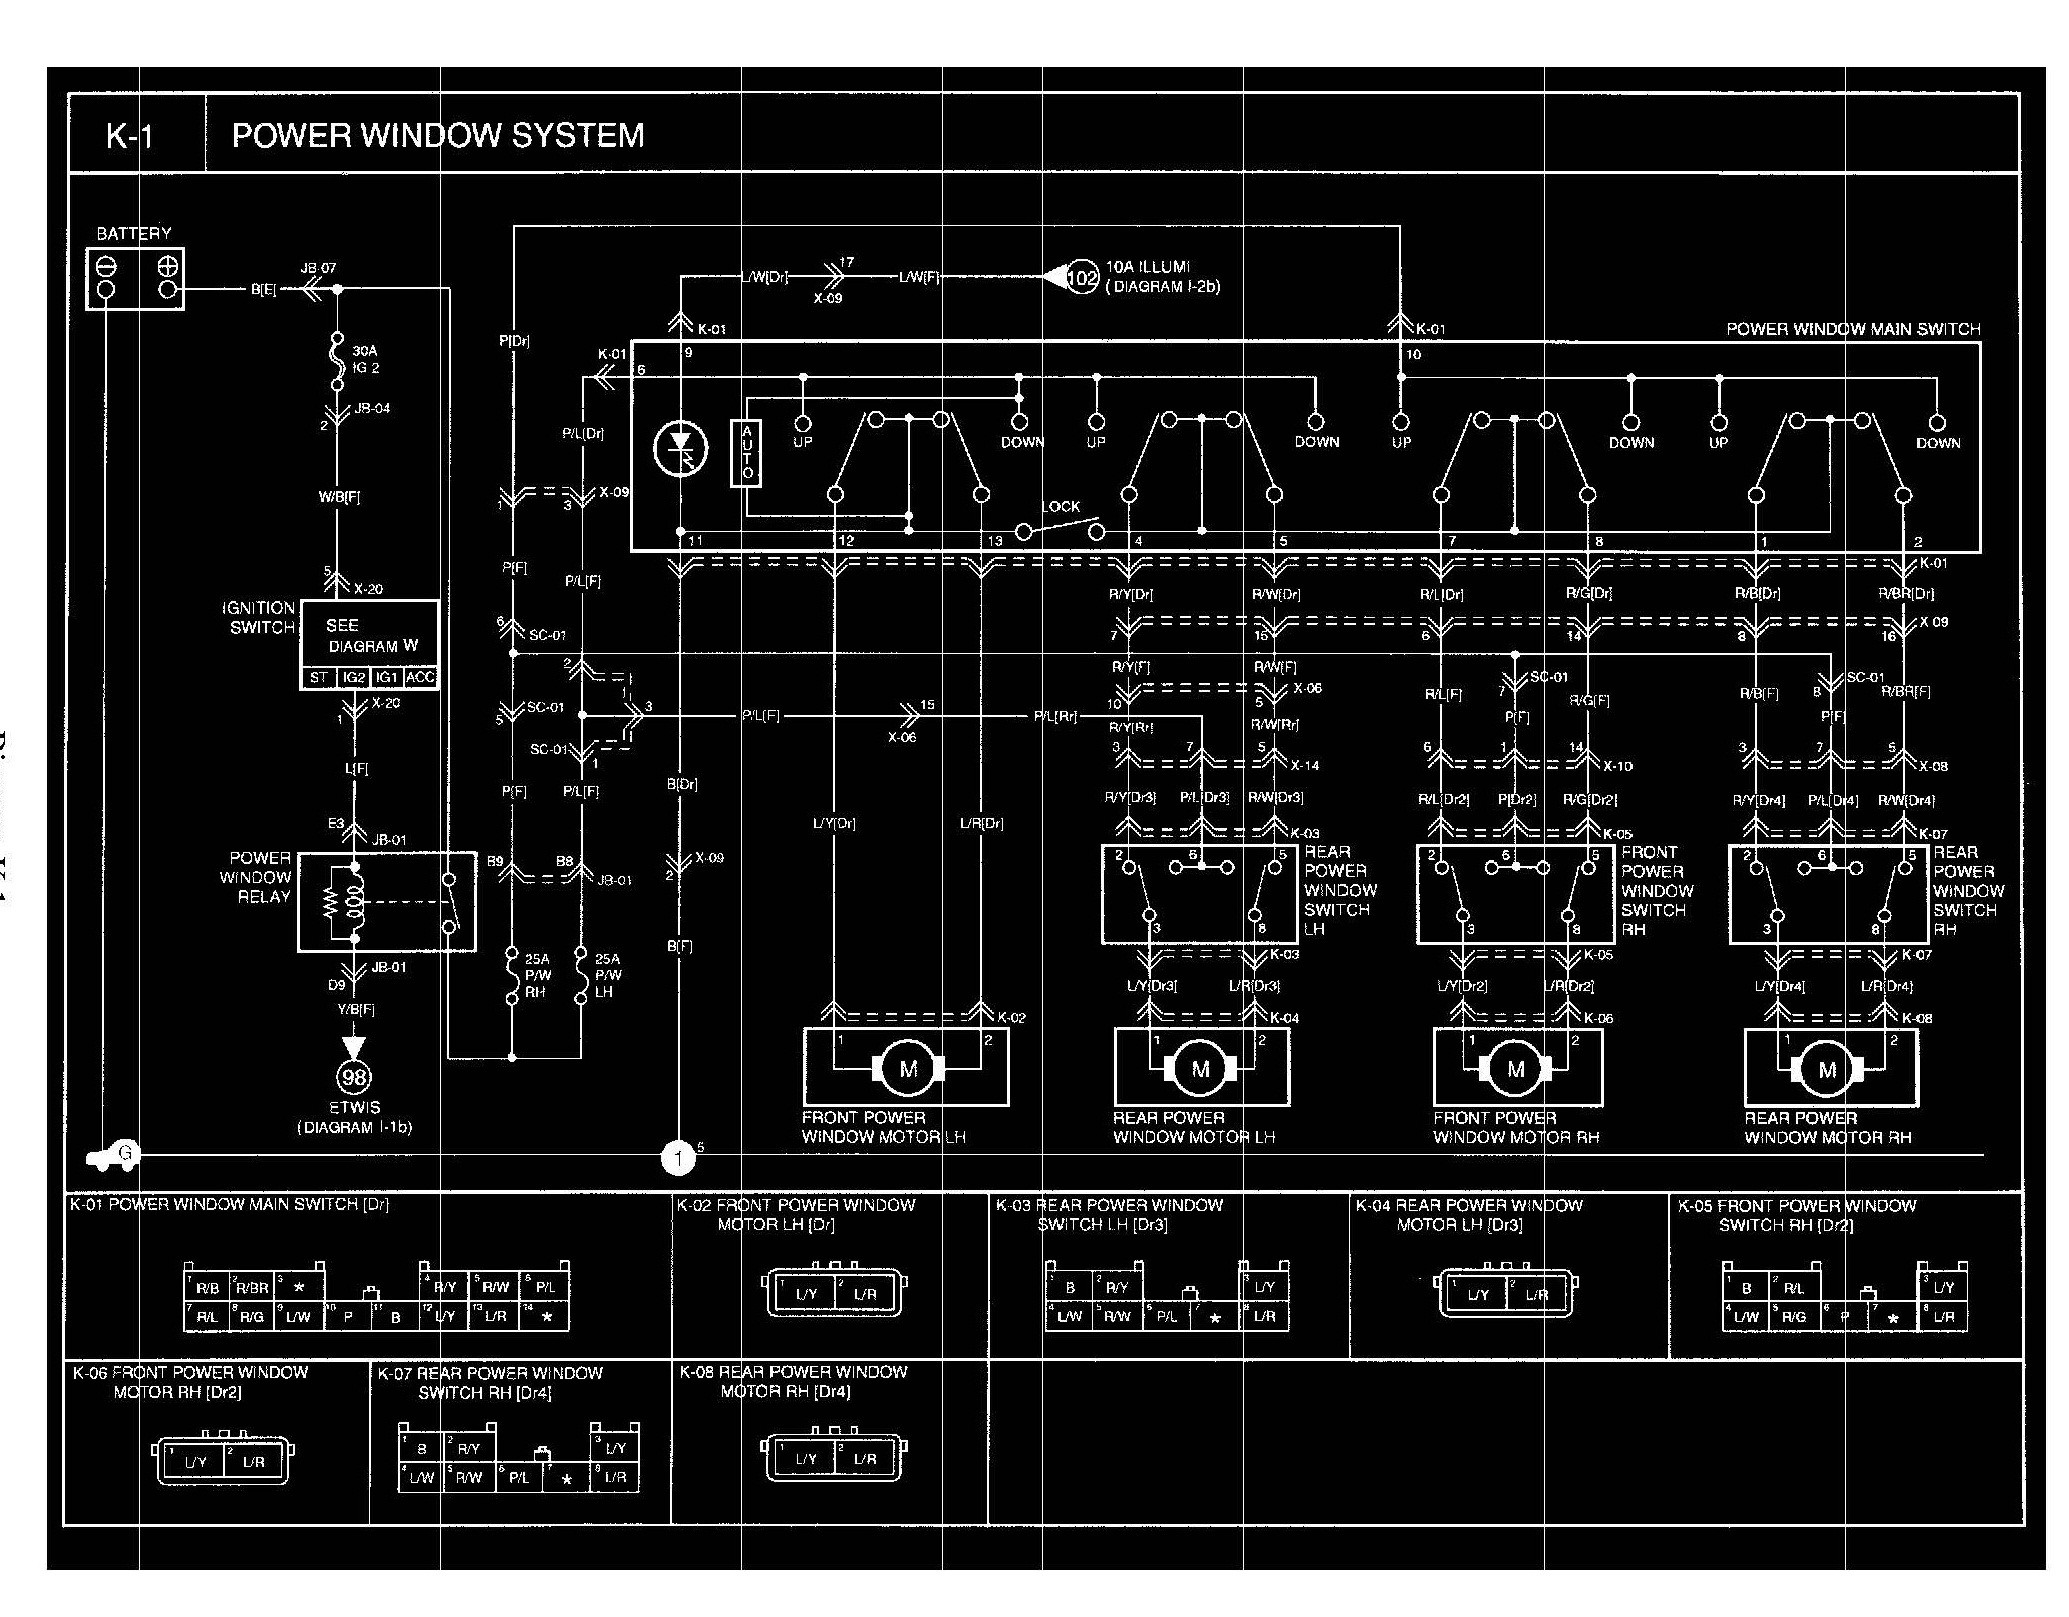 2003 Kia Spectra Engine Diagram How Do I the Power Window In A 2003 Kia Spectra Up Manually Of 2003 Kia Spectra Engine Diagram